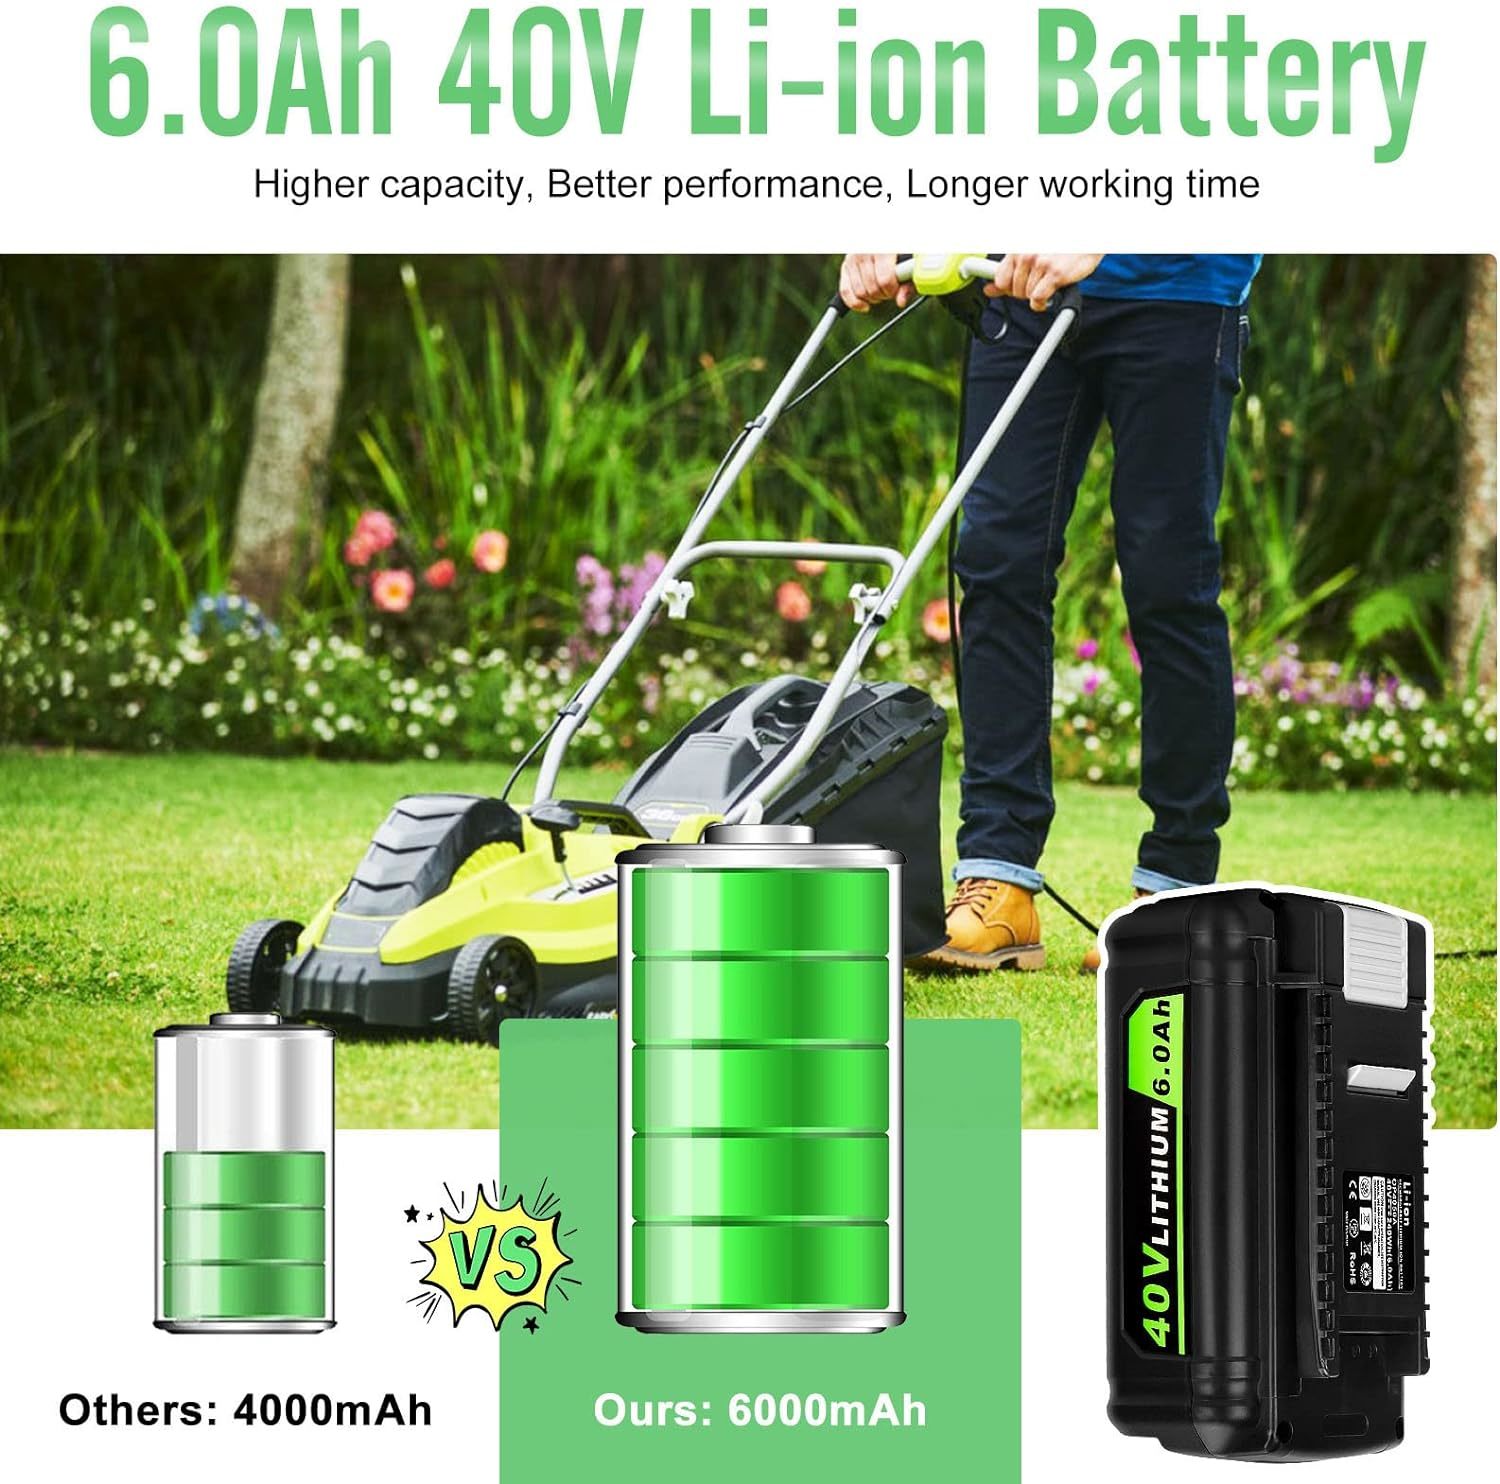 Powerextra powerextra 3.0ah 40 volt max replacement battery compatible with  black&decker lbx2040 lbx36 lbxr36 lbxr2036 40v lithium ion b